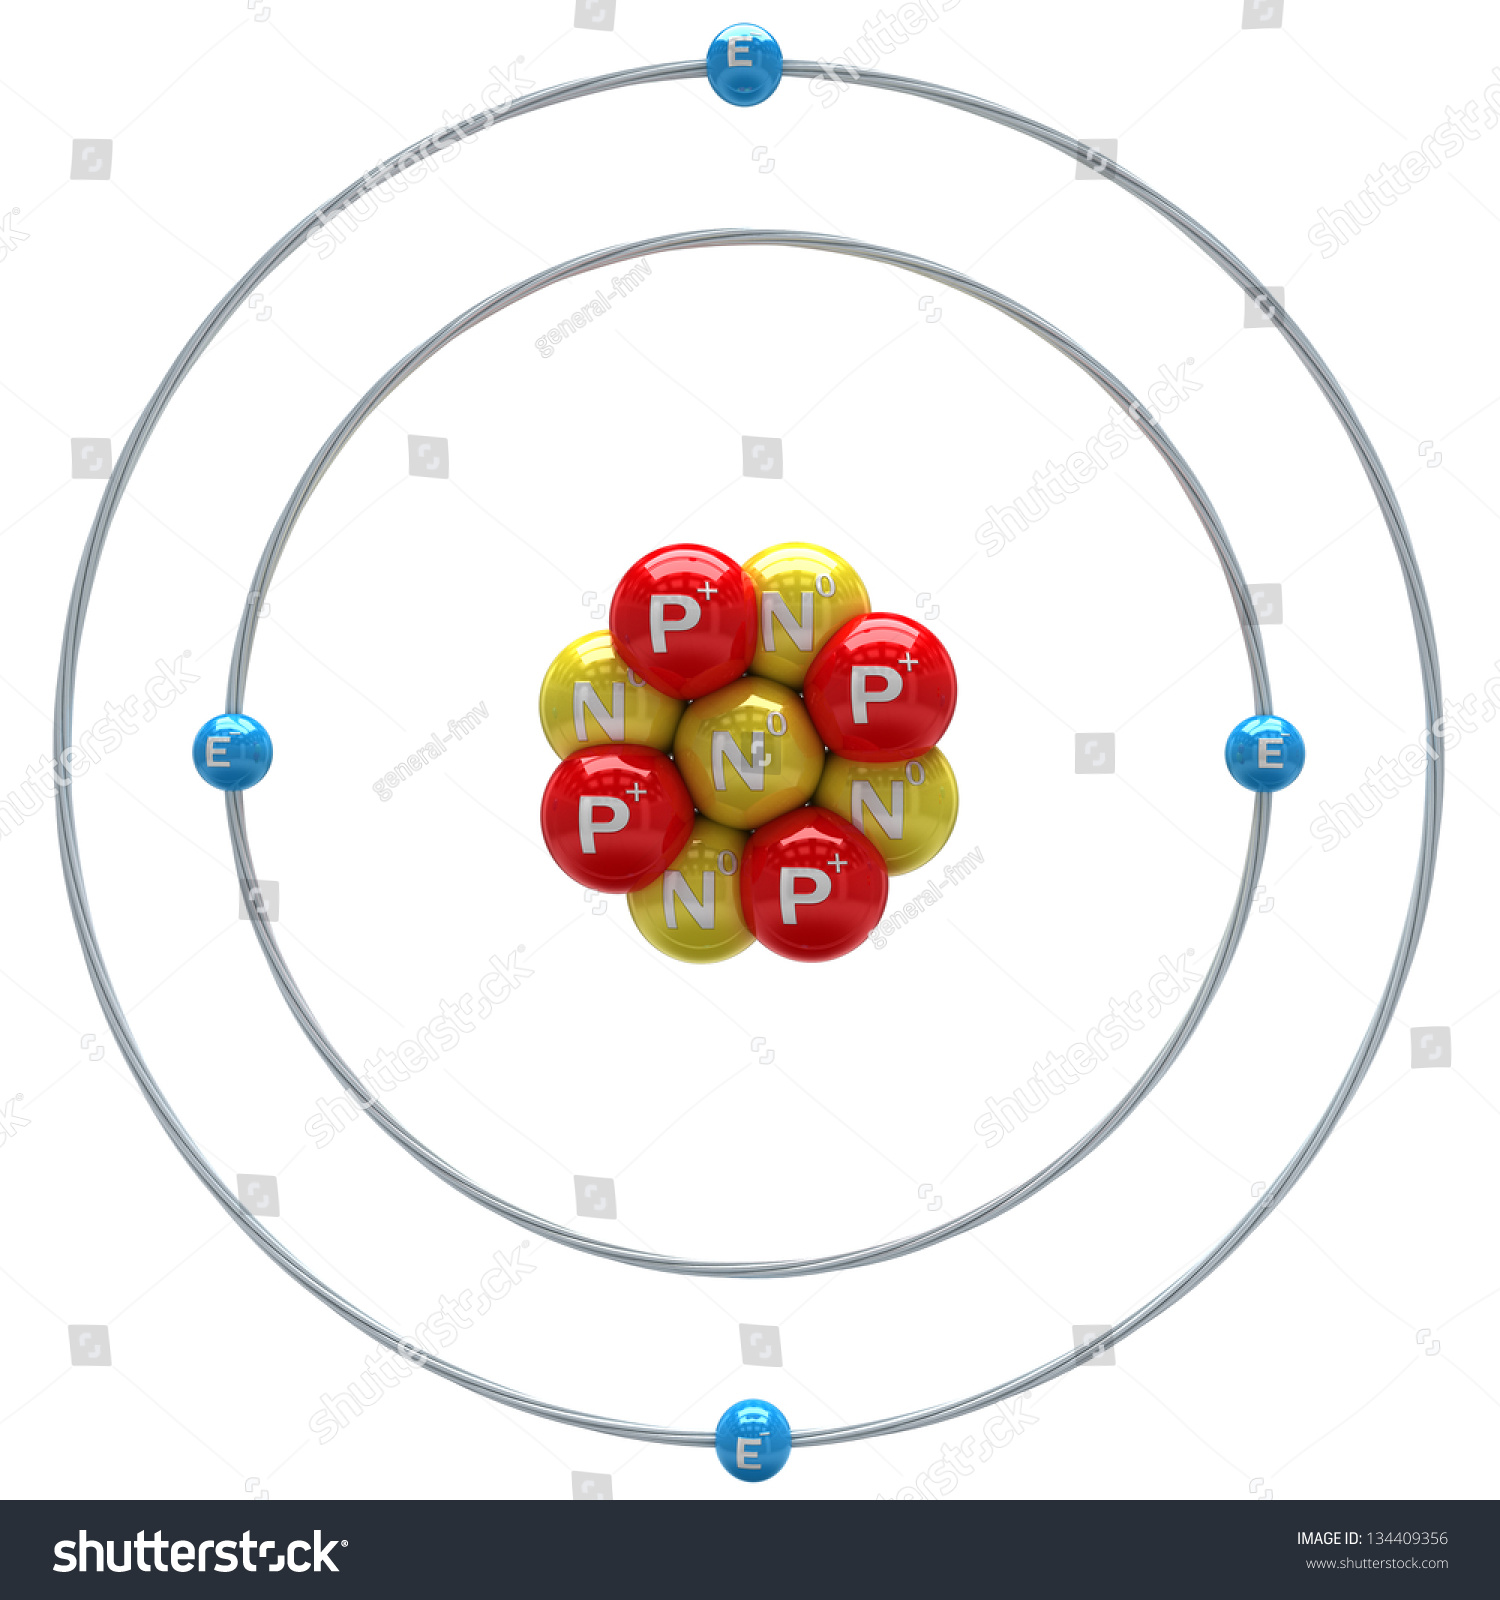 Три атома магния. Модель атома алюминия. Модель атома магния. Модель атома 23. Рисунок атома магния.